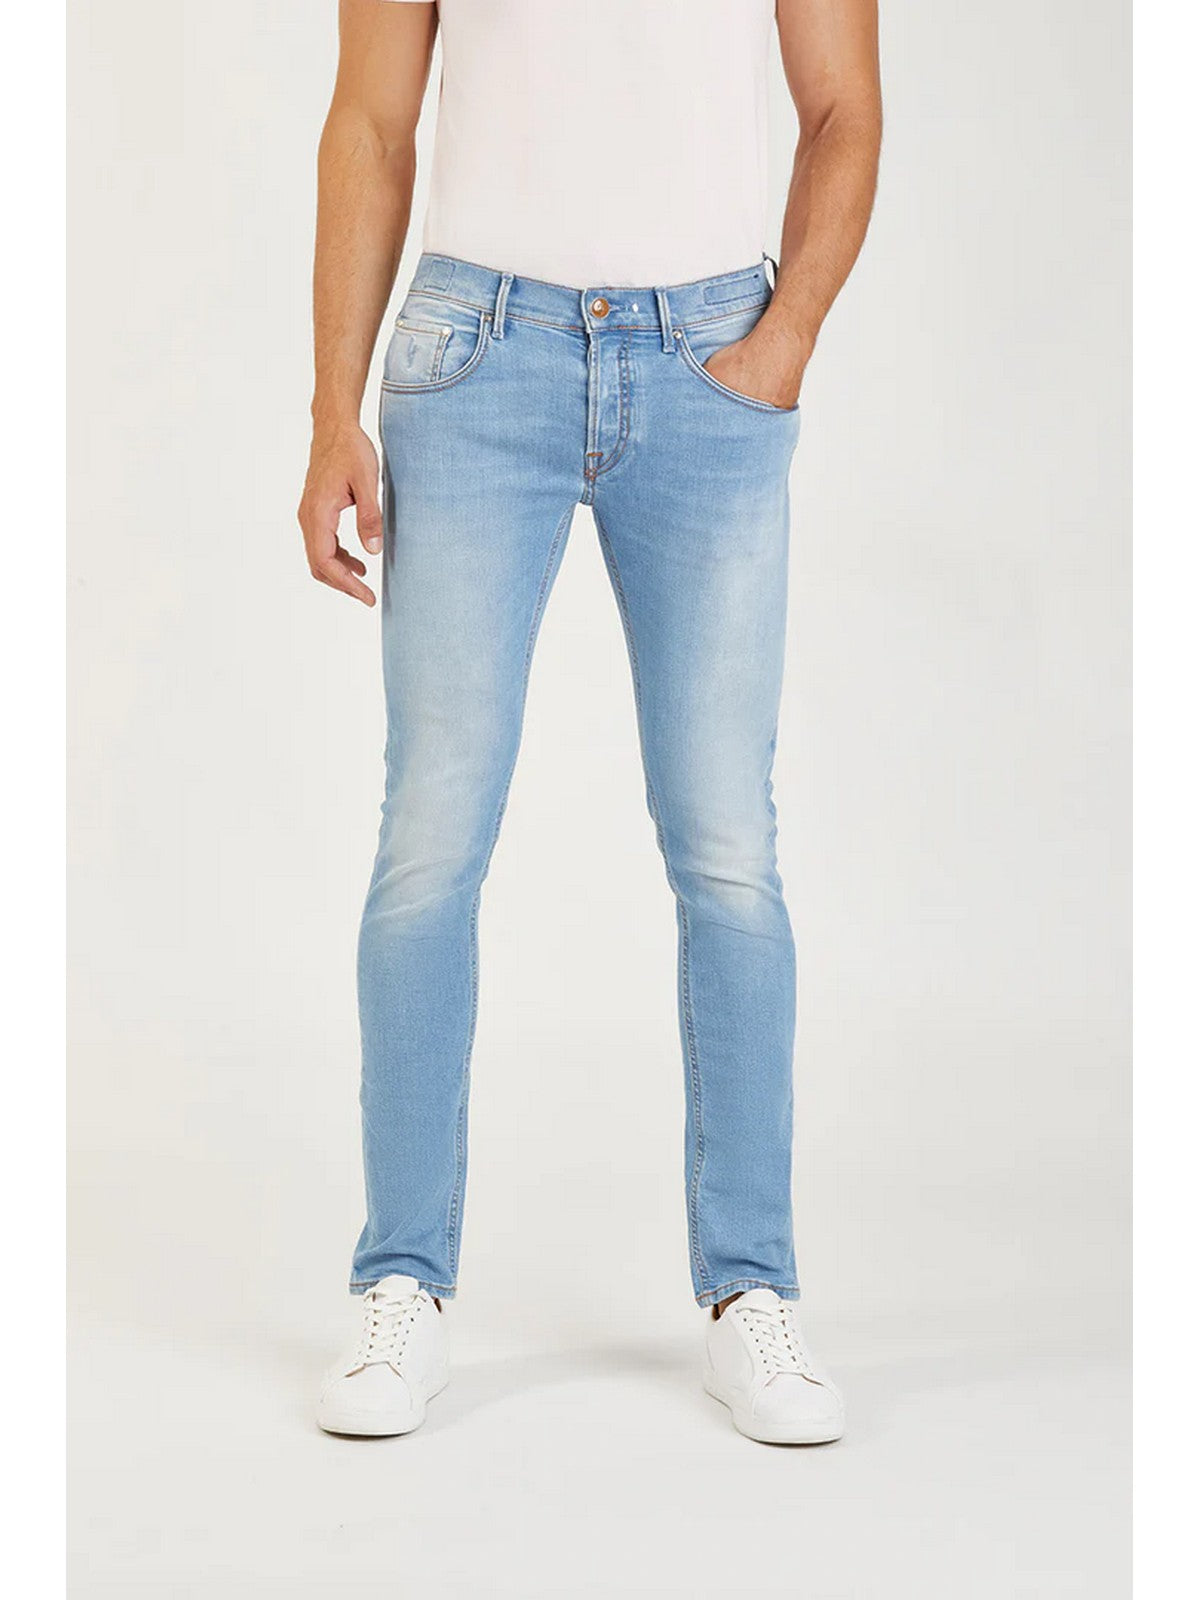 HANDPICKED Jeans Uomo  ORVIETO 03140W5 005 Blu